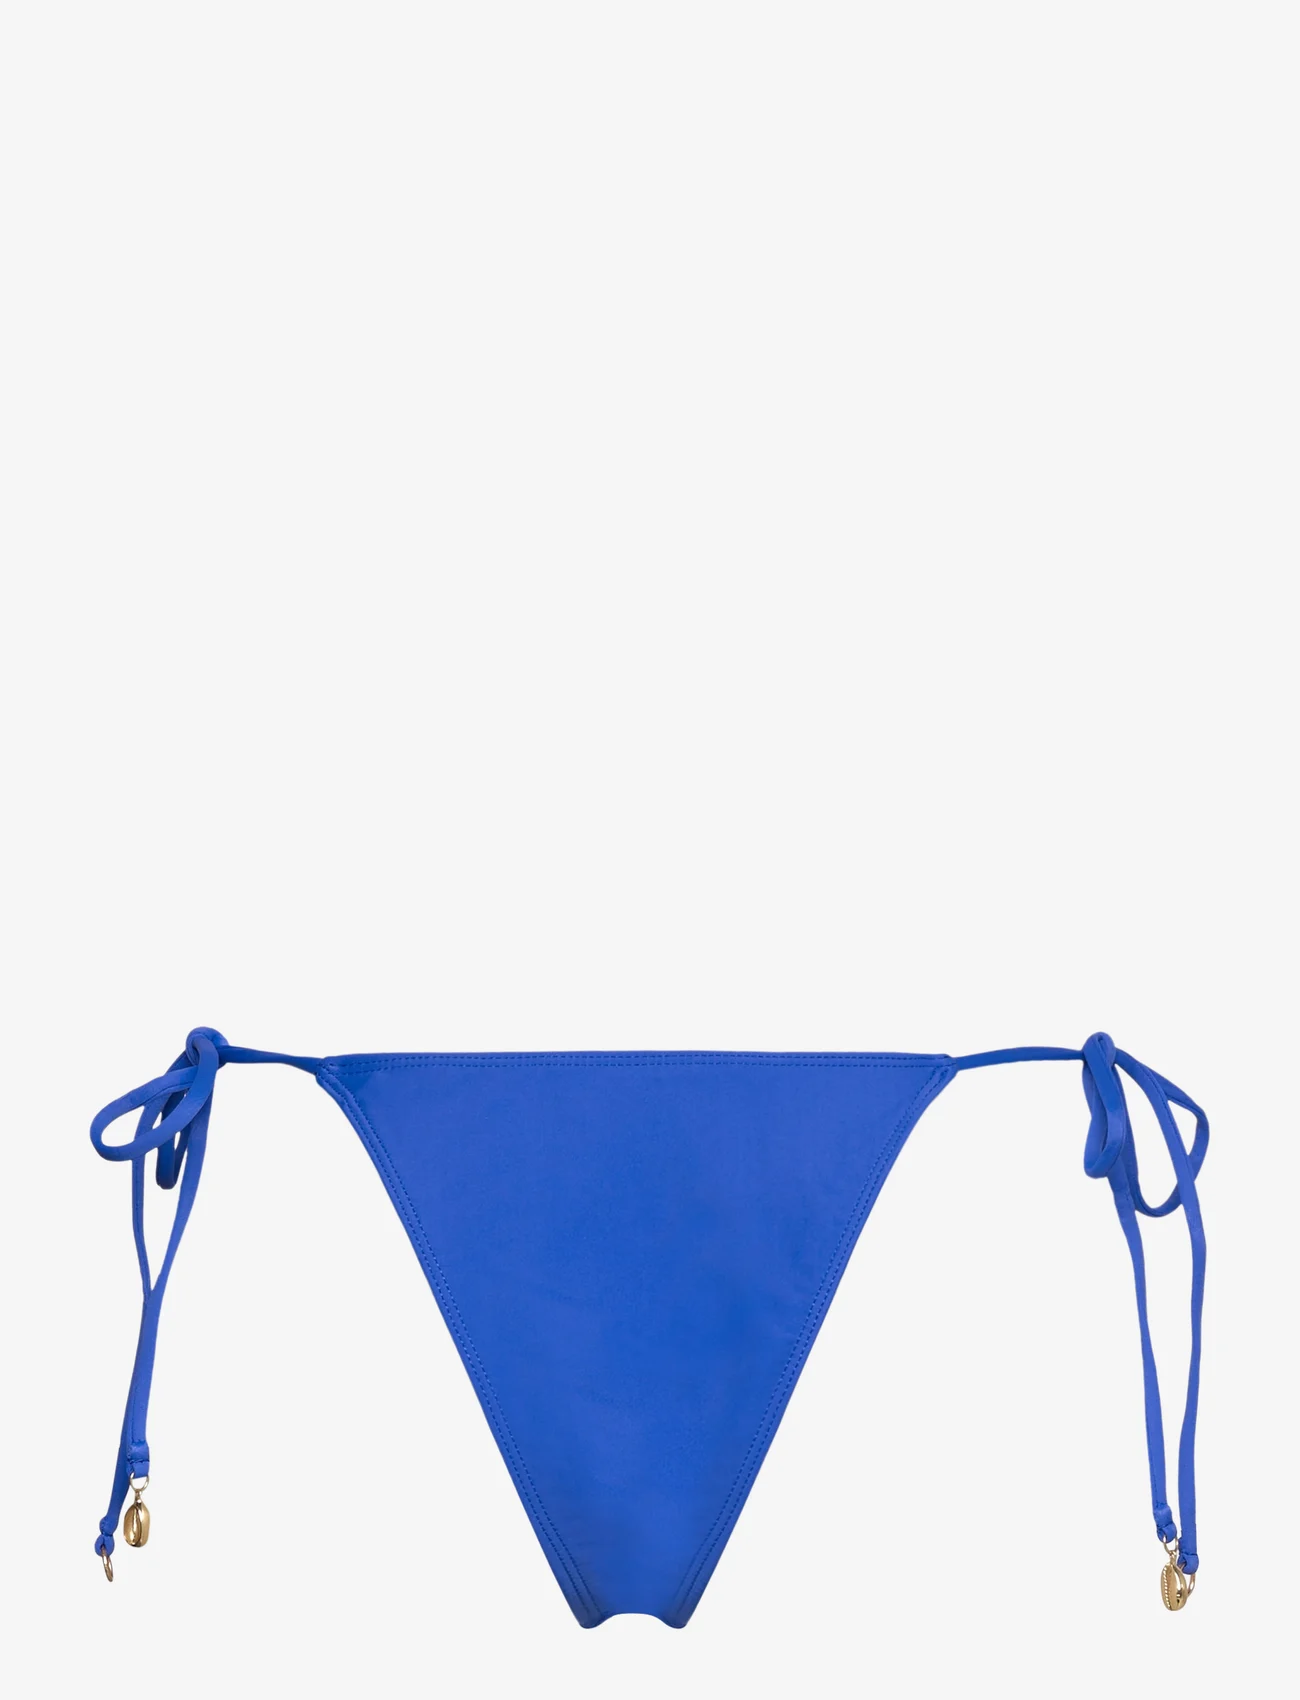 Faithfull The Brand - ANDREA BIKINI BOTTOMS - side tie bikinis - azure blue - 1